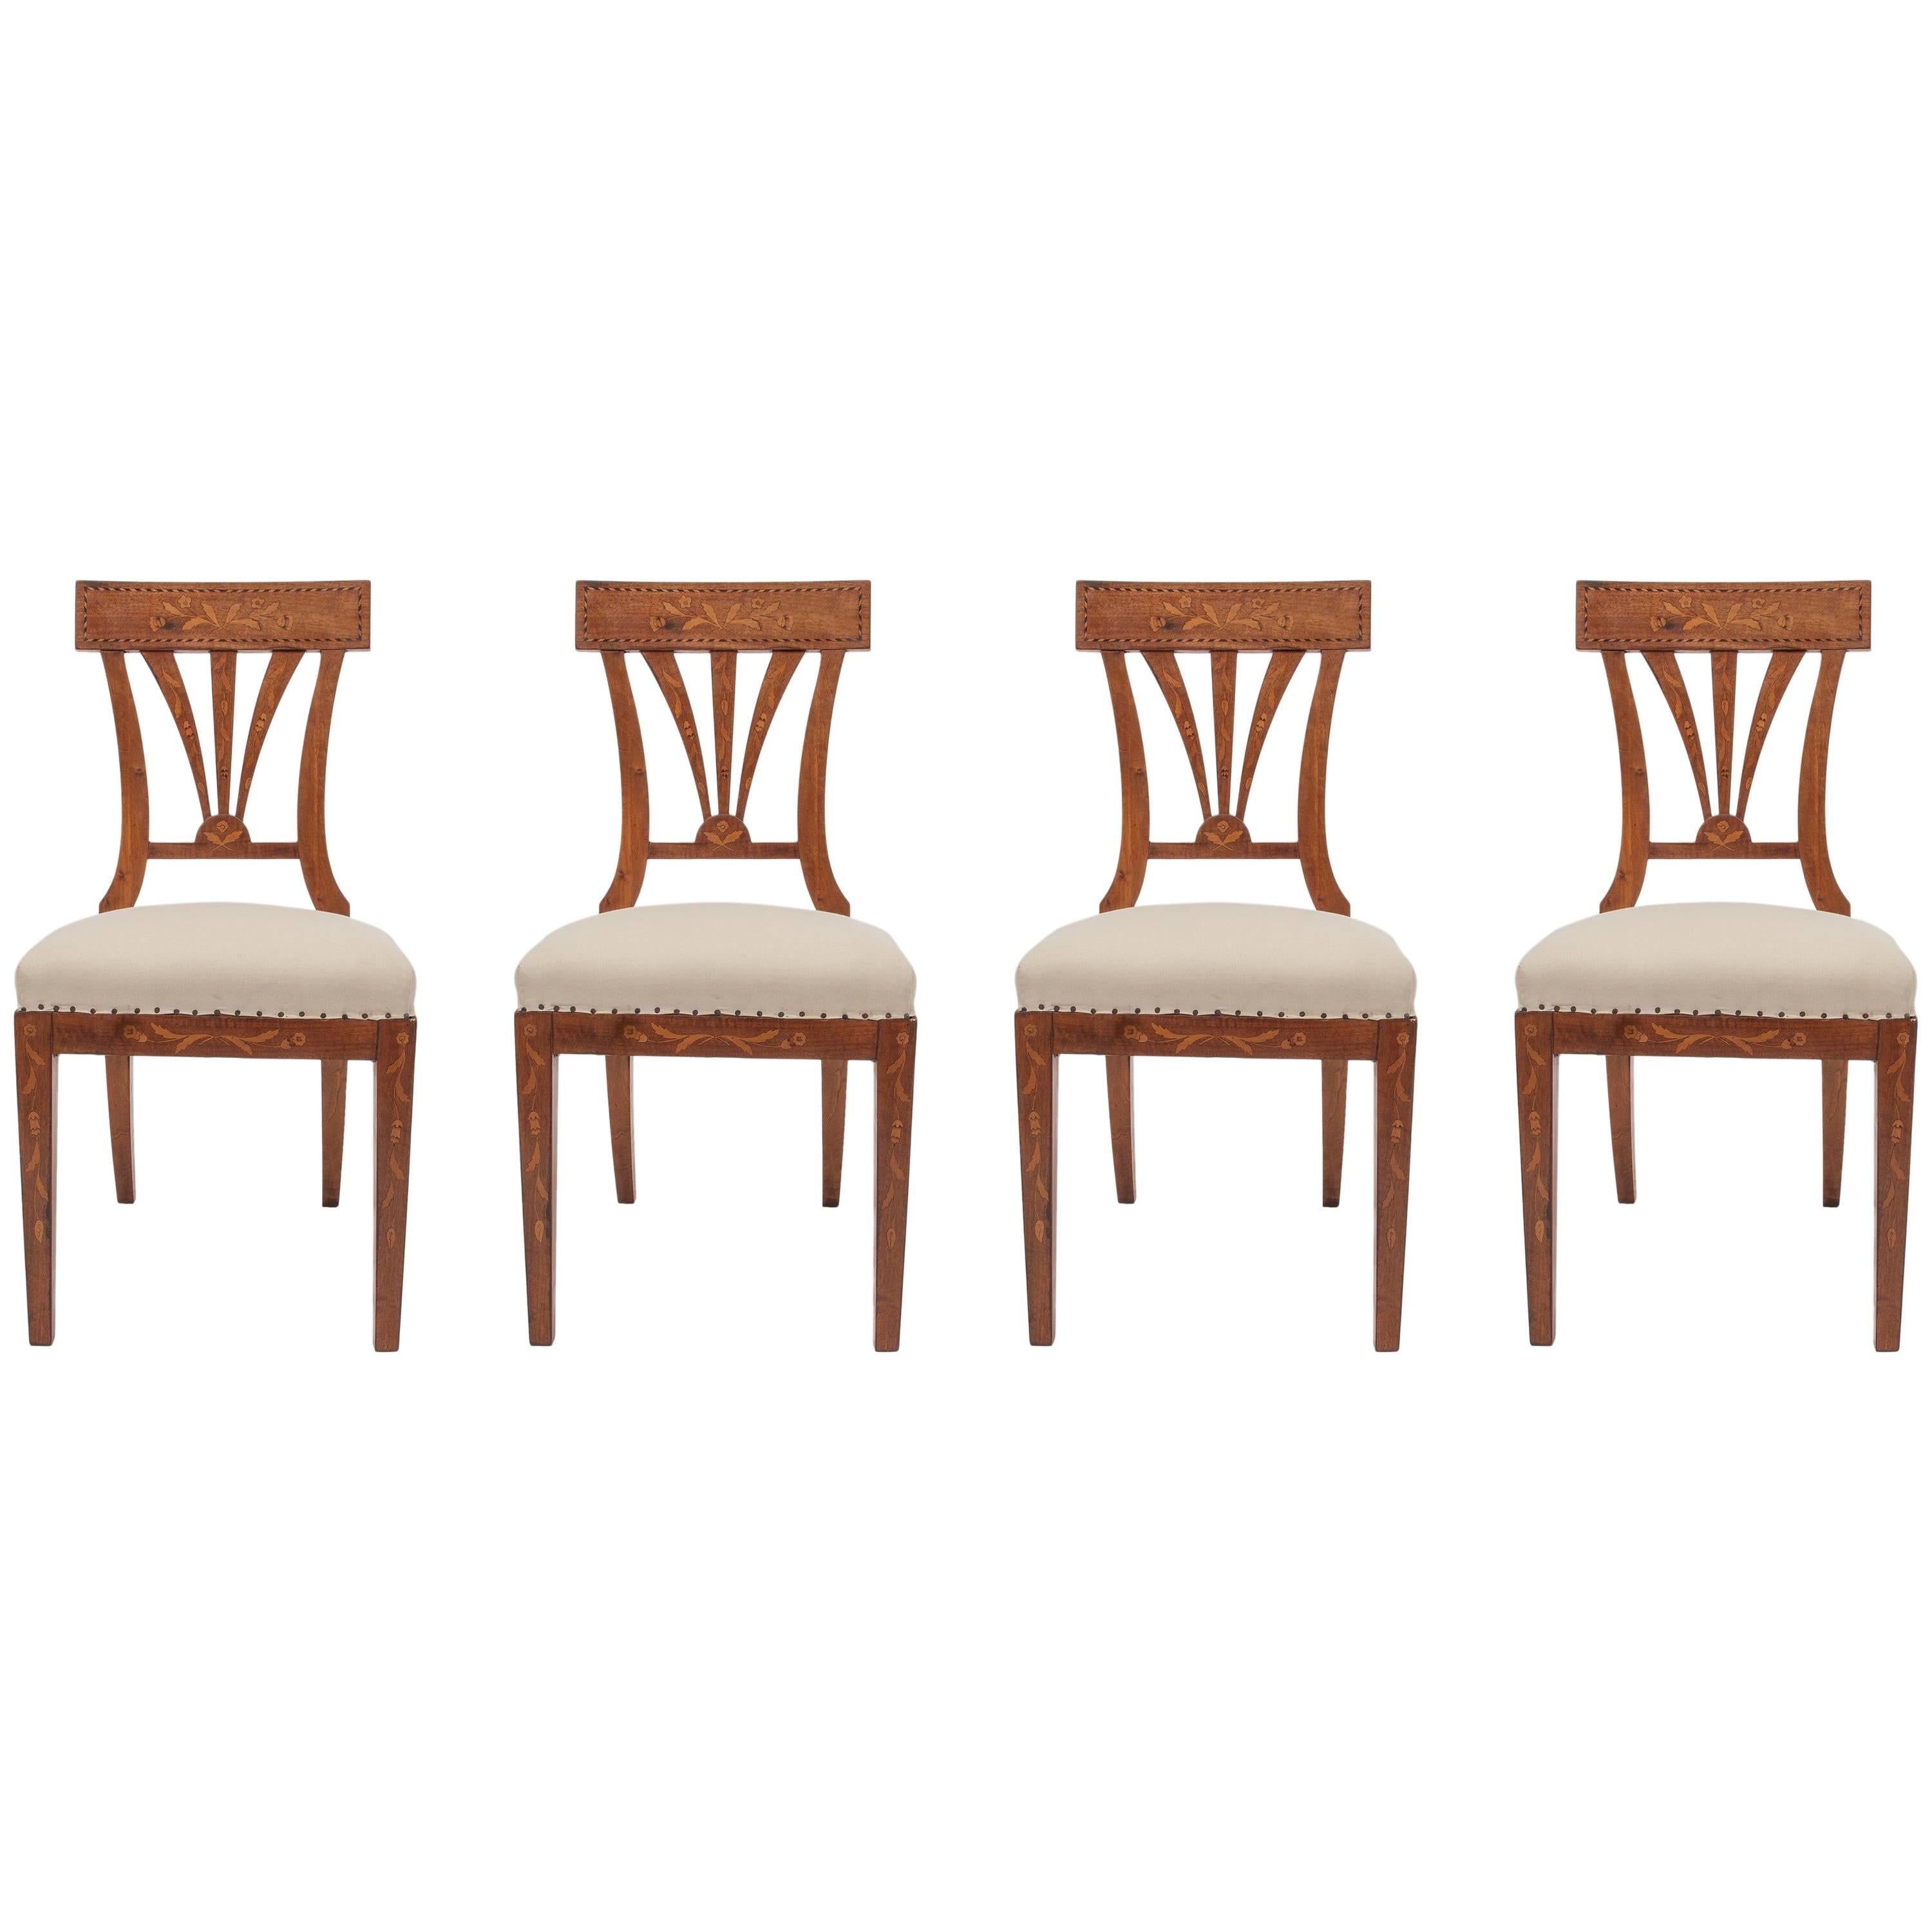 Set of Elegant and Inlaid Austrian Biedermeier Chairs